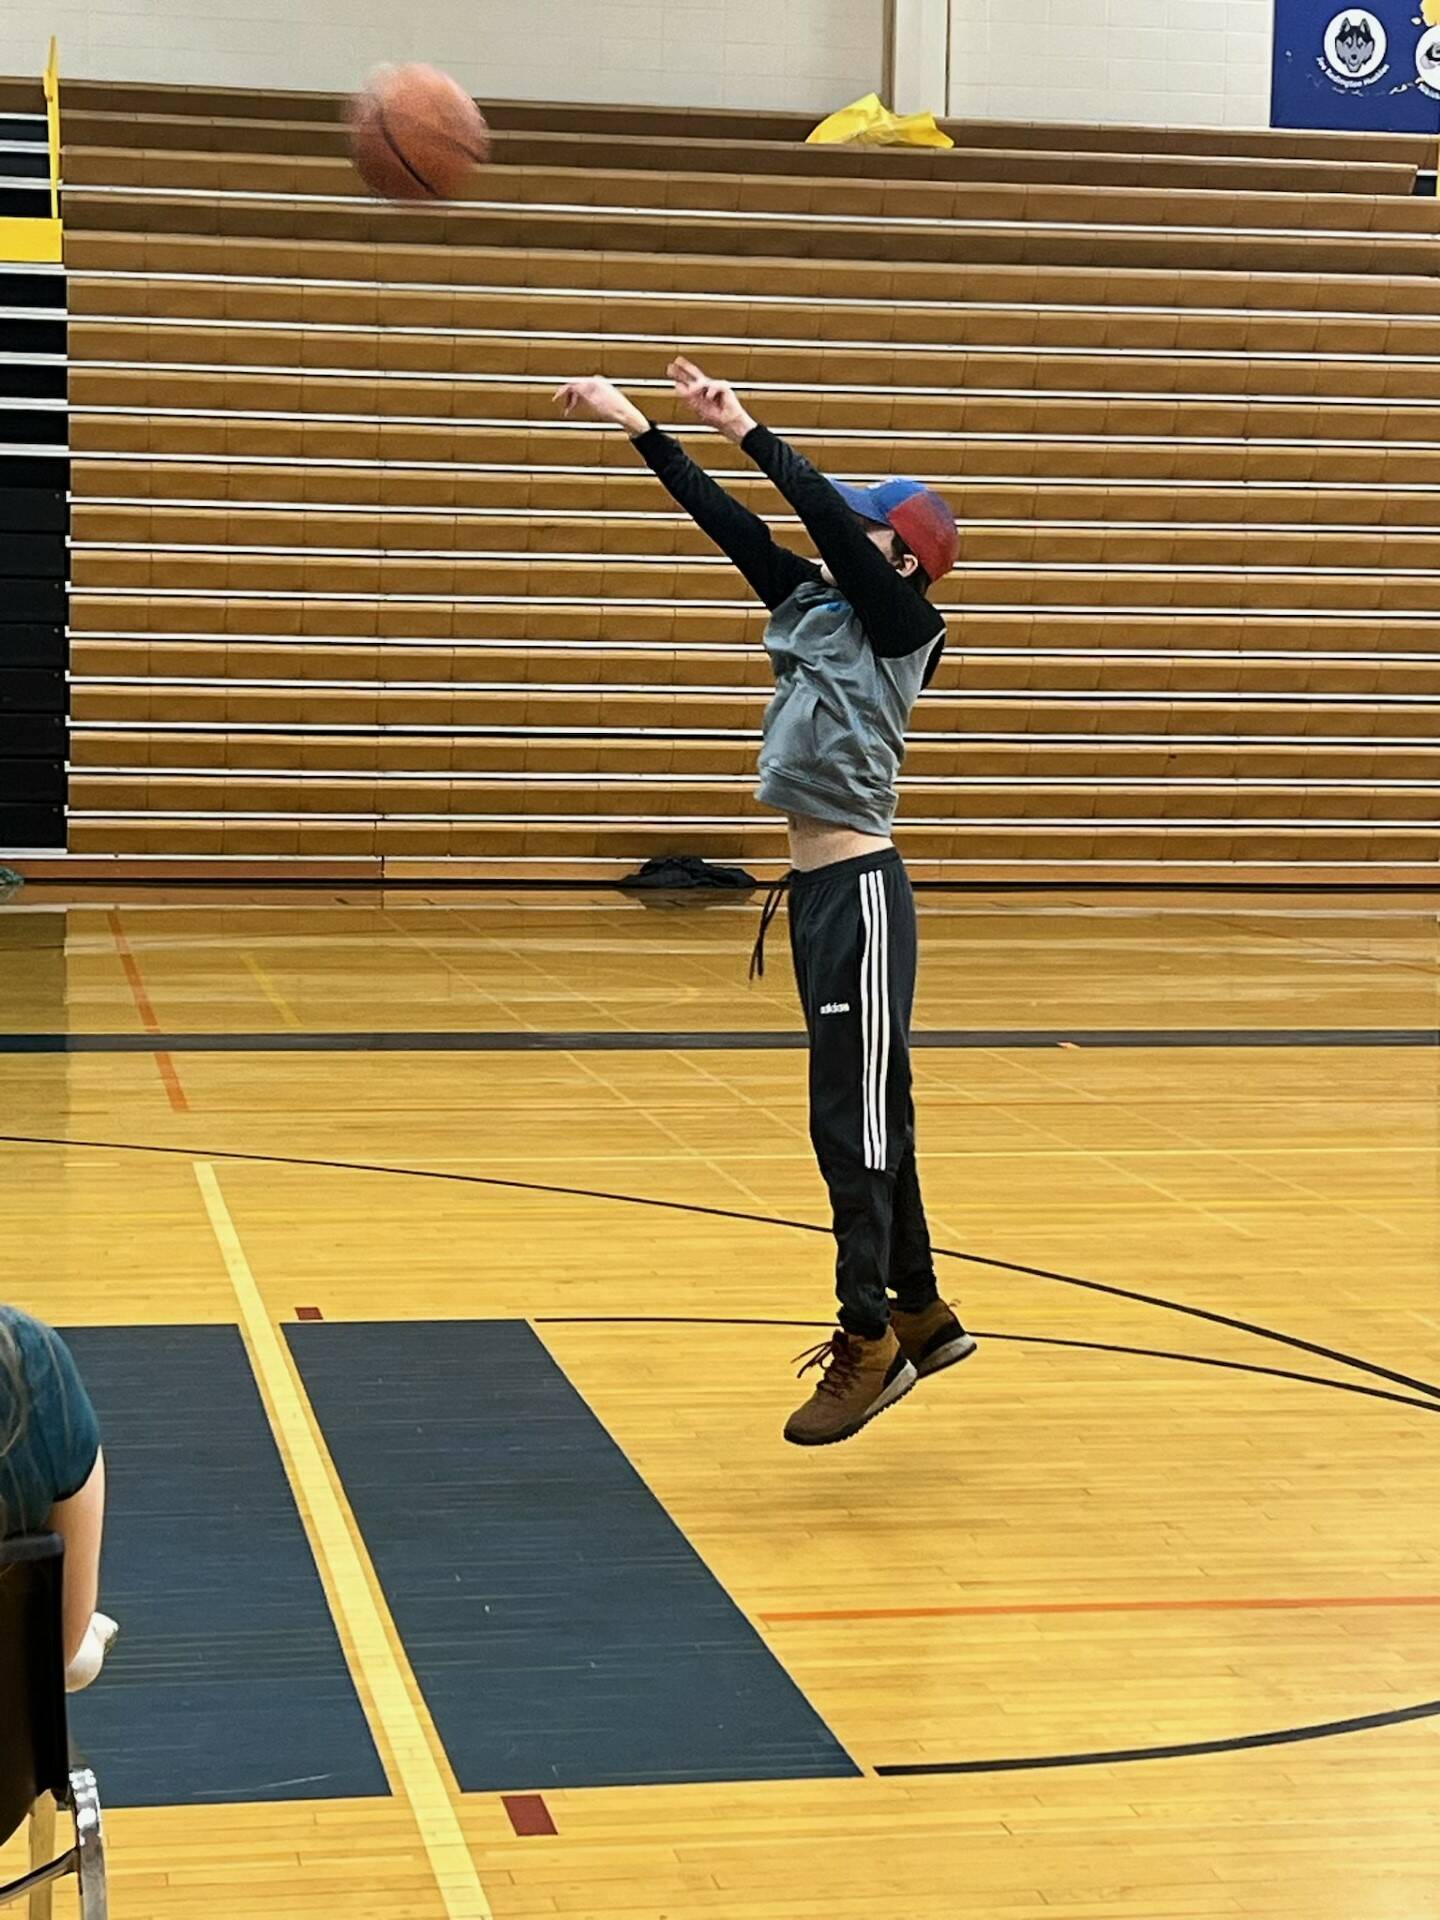 Boys division competitor John Chapple V shoots a free throw in the Homer High School gym on Saturday, Nov. 24th, in Homer, Alaska.